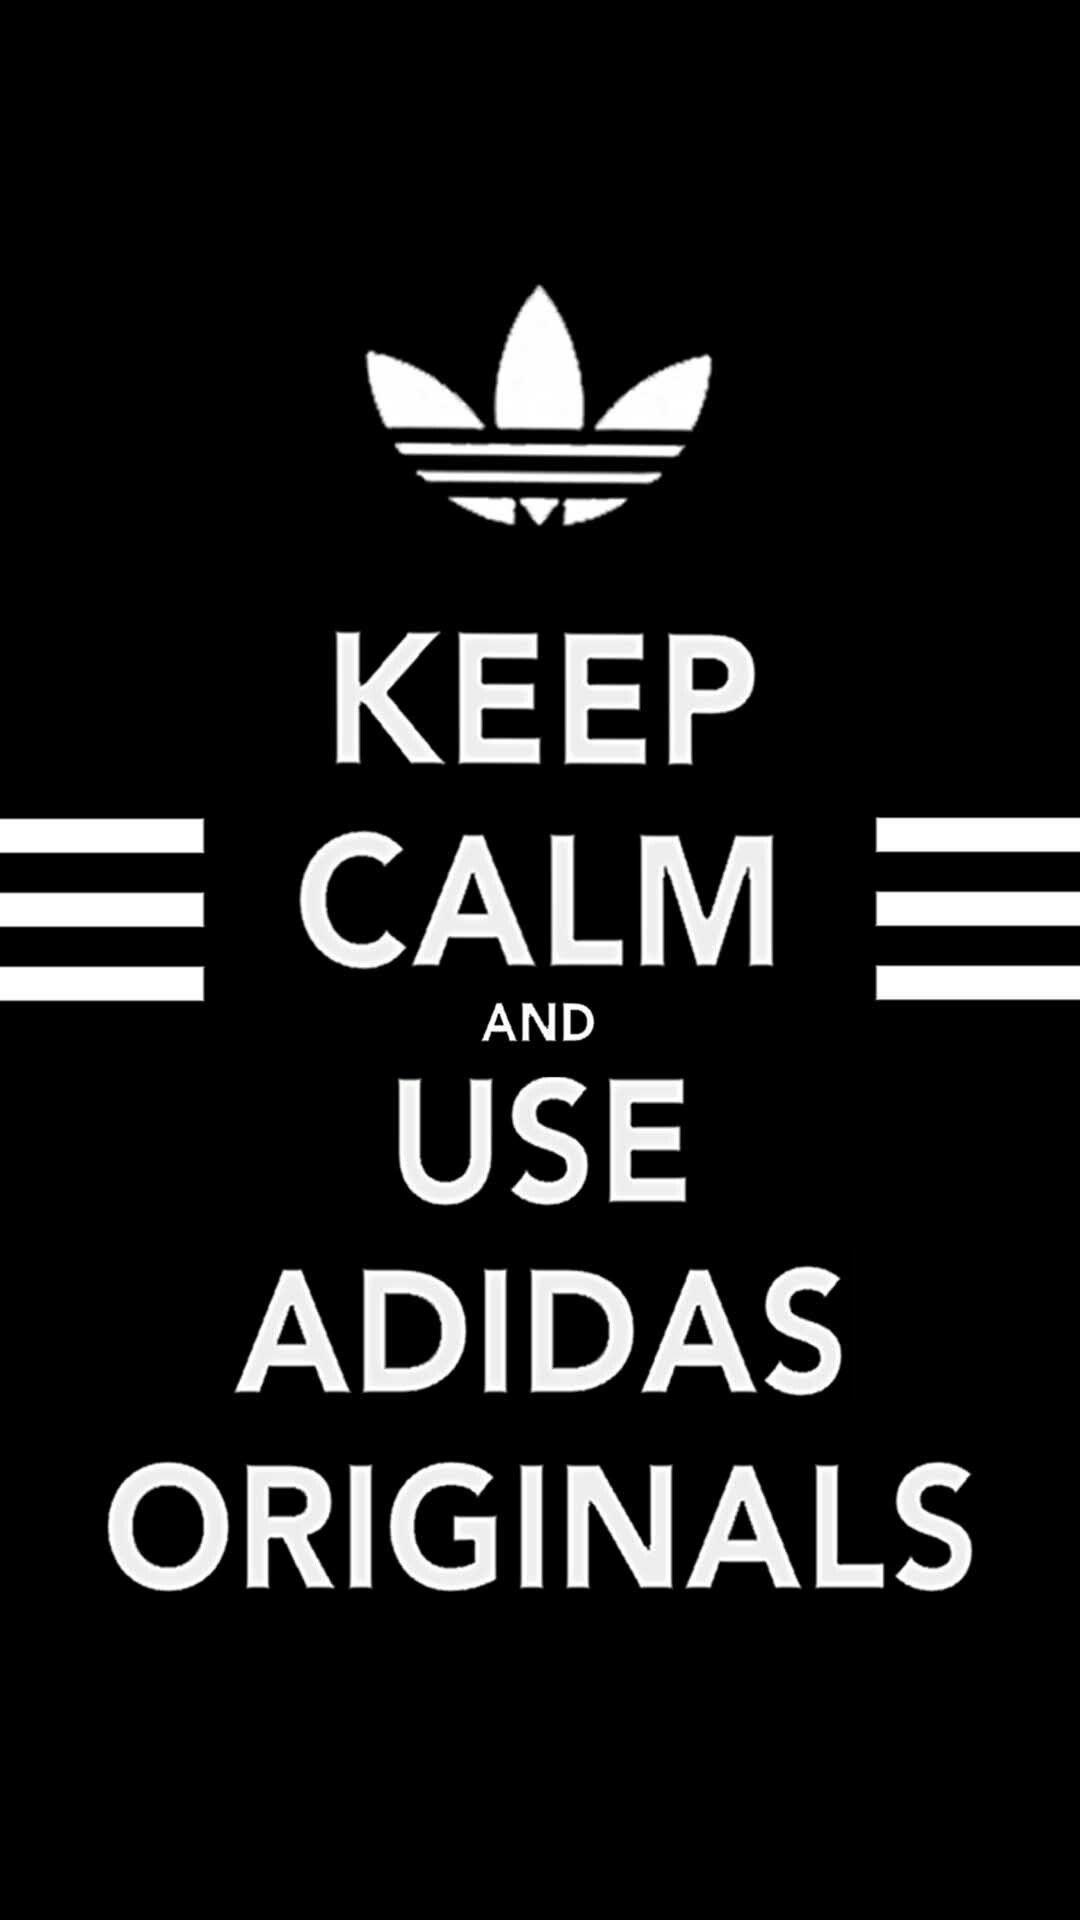 Adidas Original Black And White Wallpapers